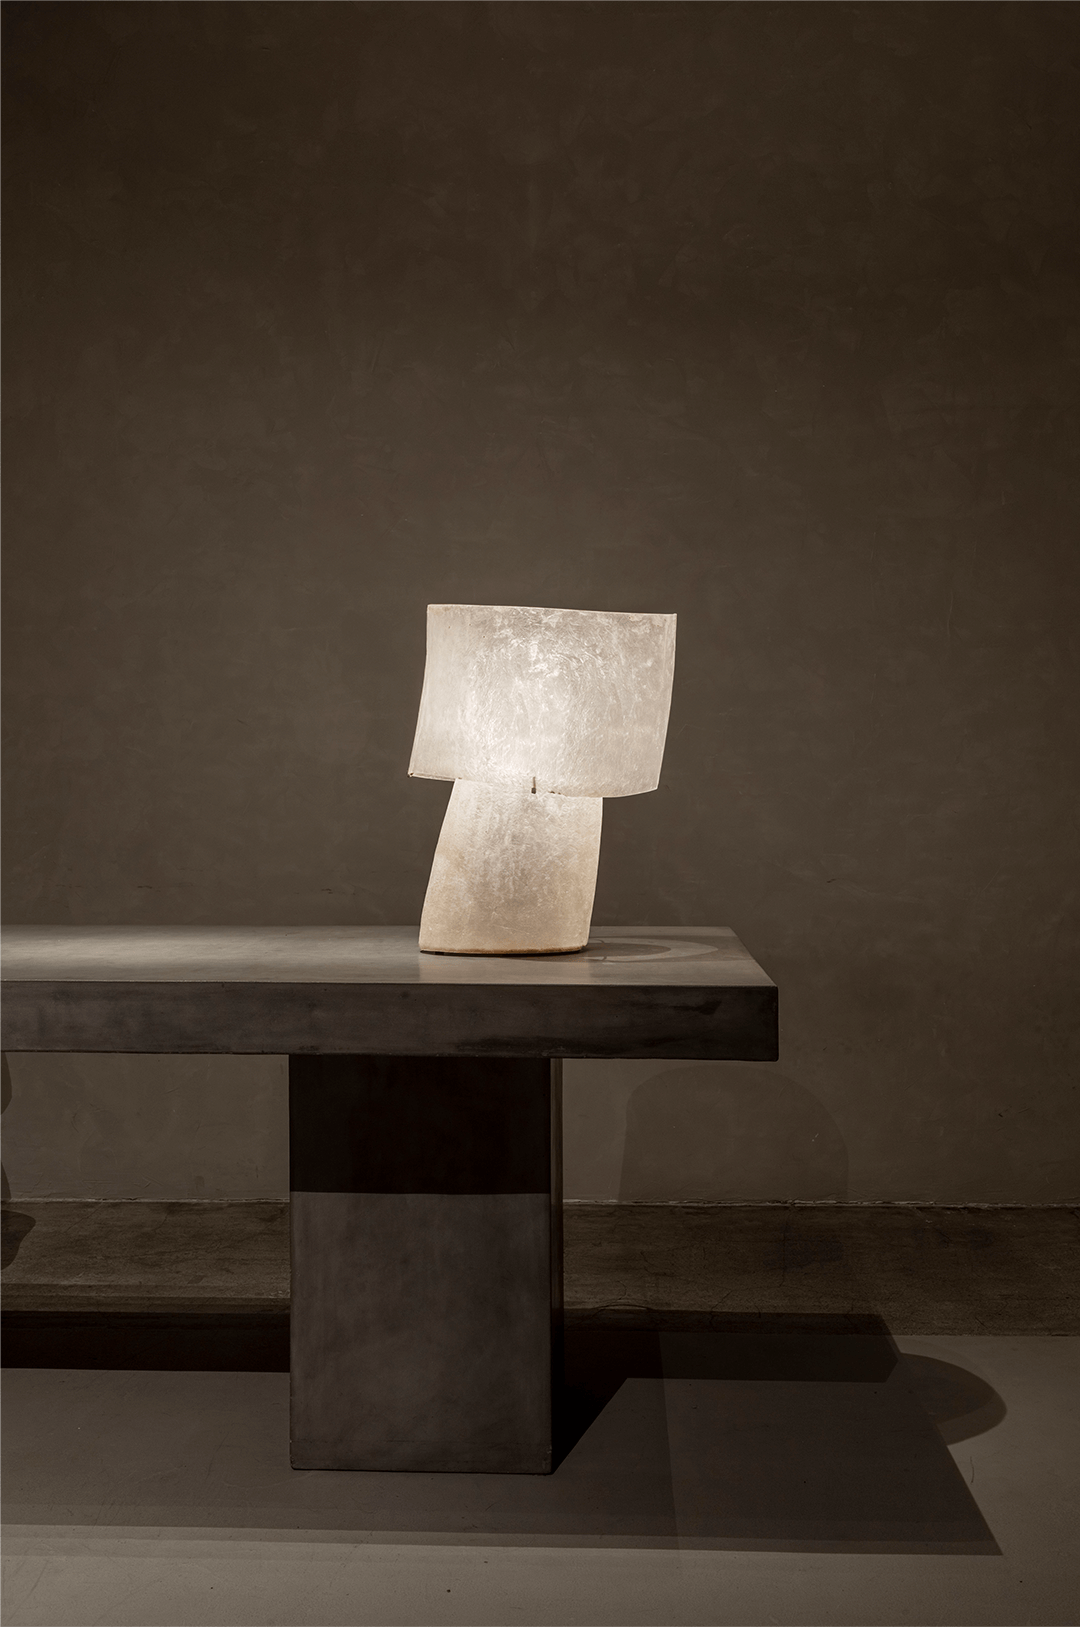 Kilzi lighting | Mush Tall fiberglass table lamp, a elegant designer lamp with soft organic shapes resembling a growing mushroom. Perfect for home decor.